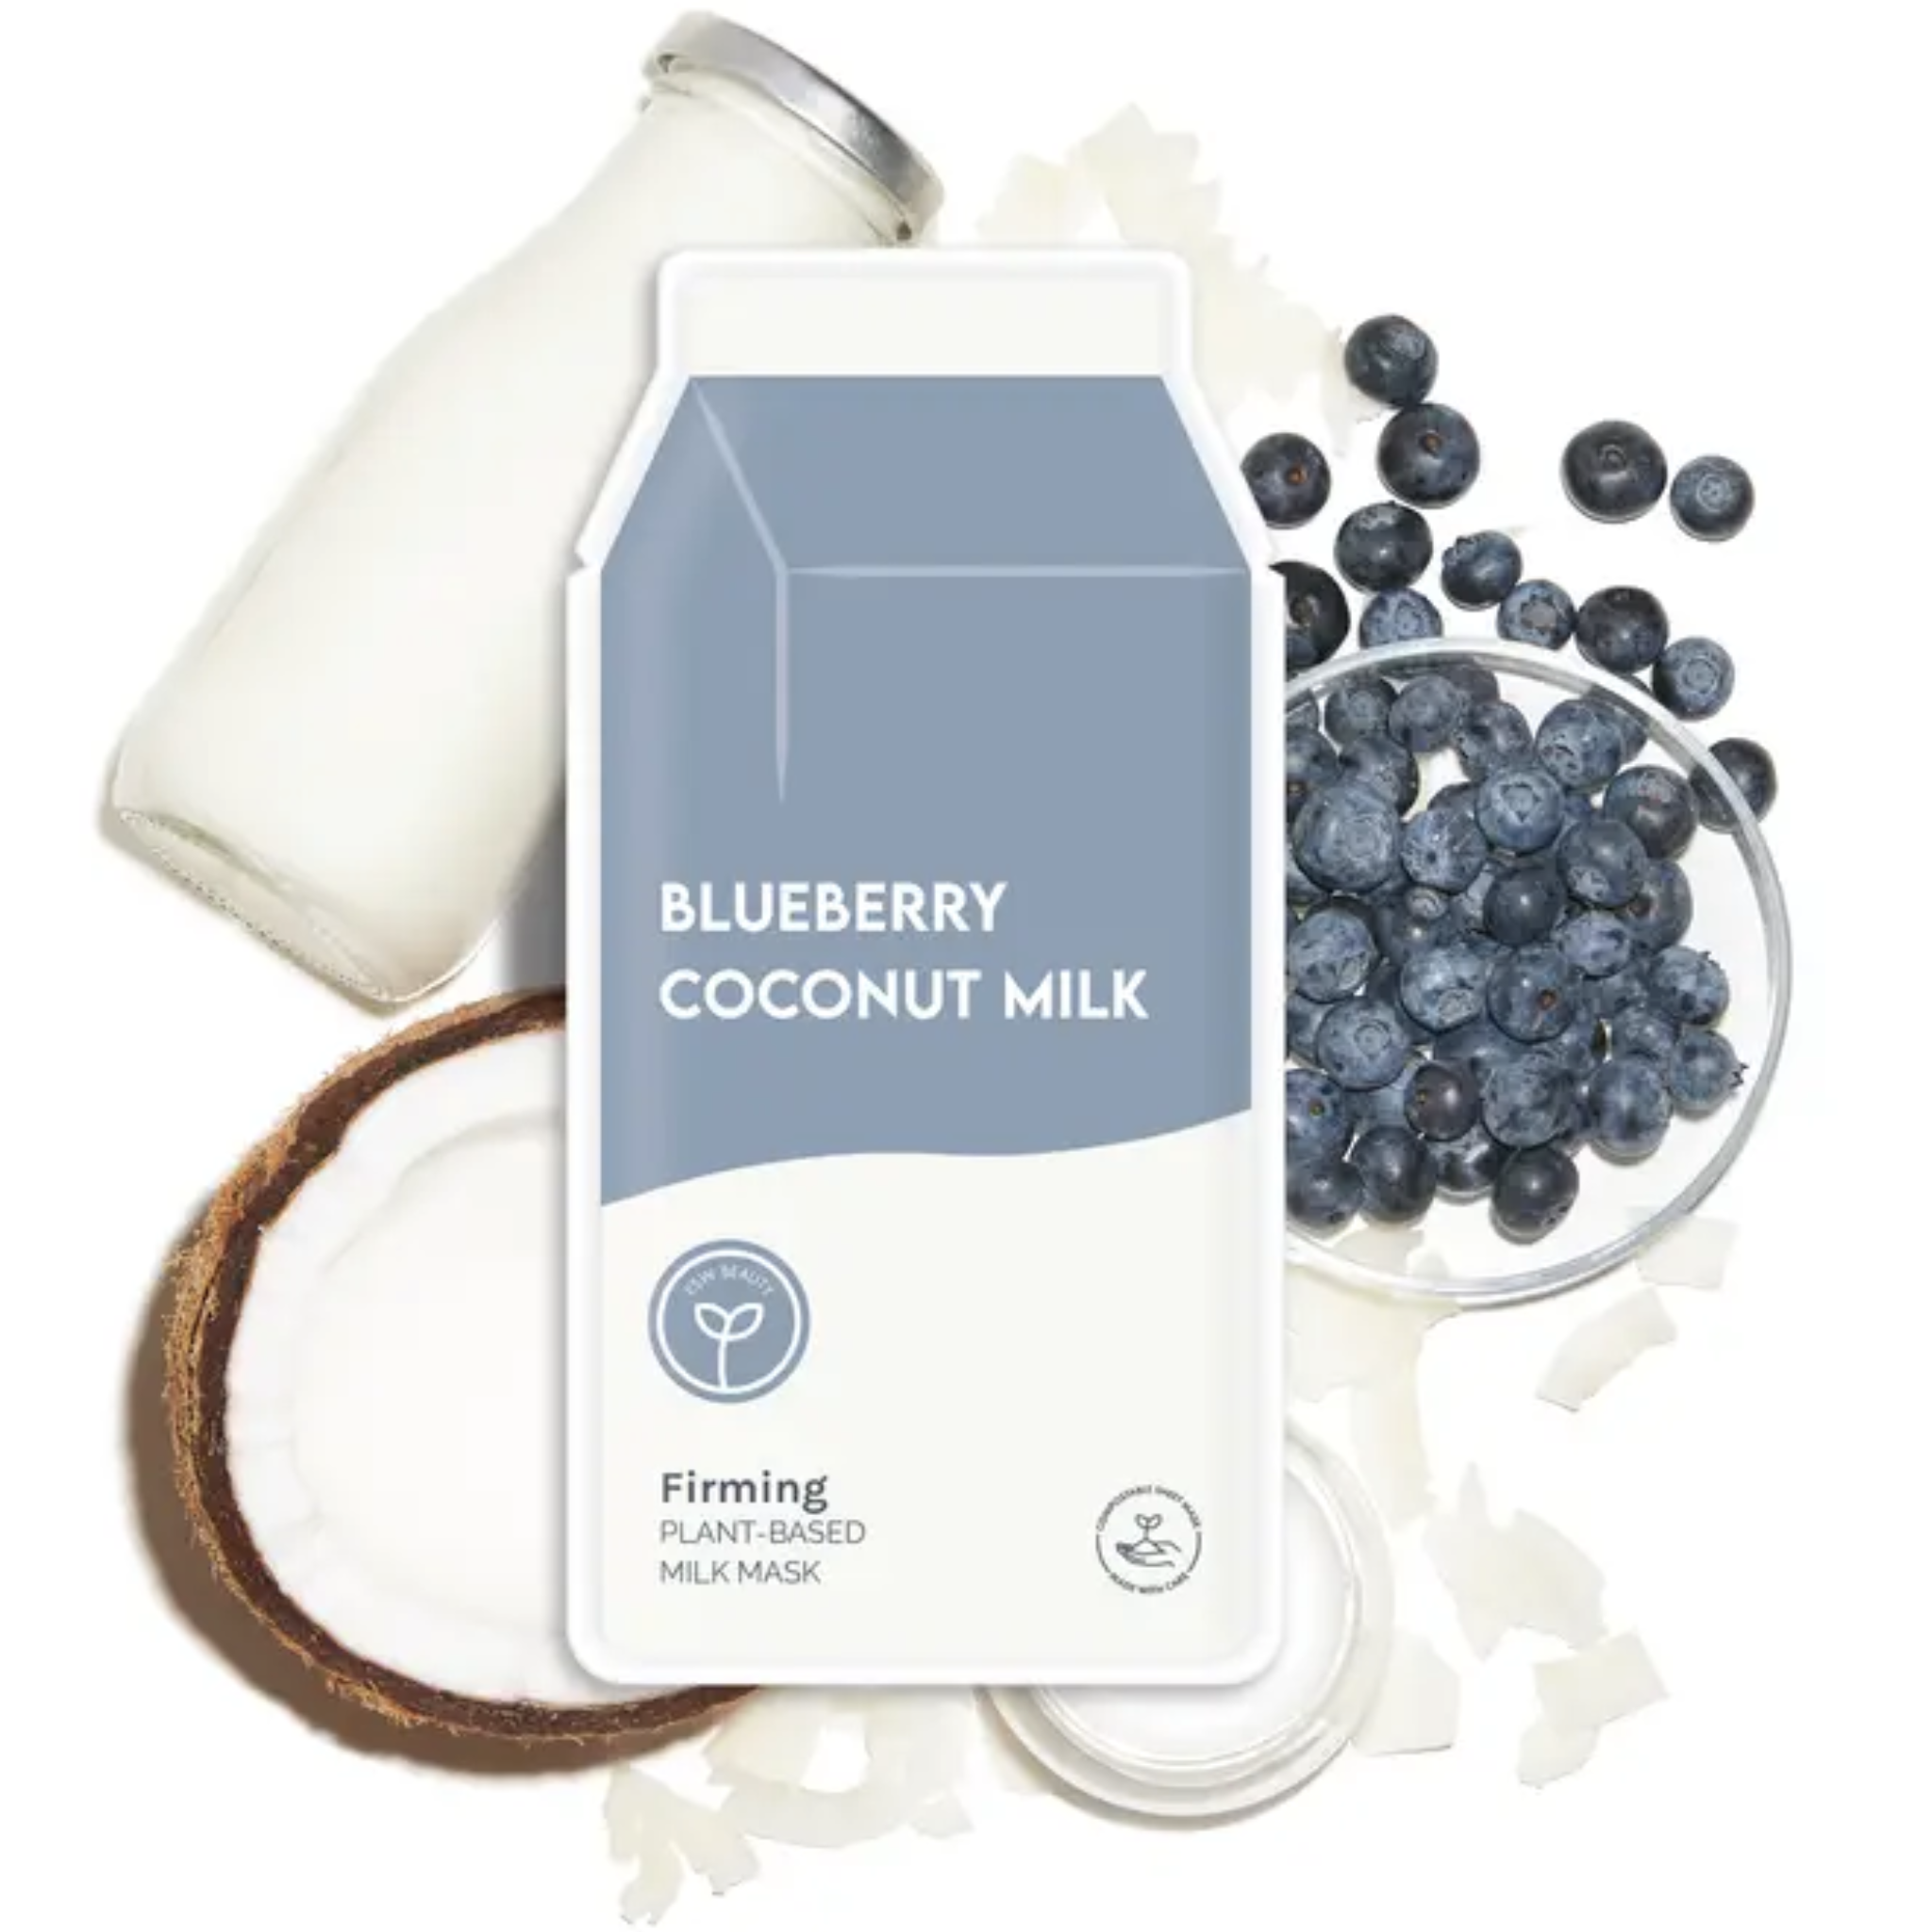 Blueberry Coconut Milk Firming Plant-Based Milk Sheet Mask